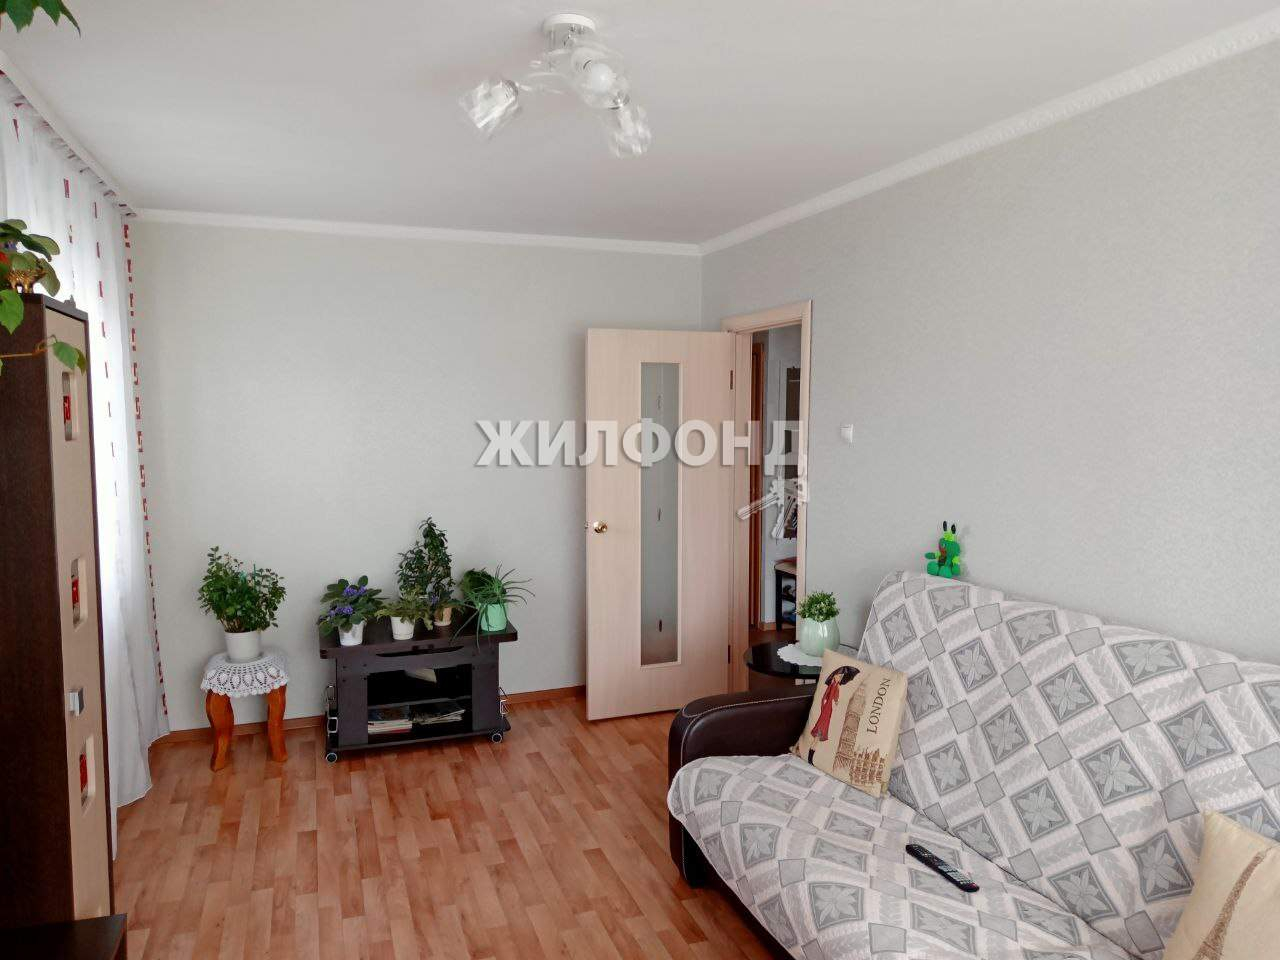 Продажа 3-комнатной квартиры, Междуреченск, Пушкина улица,  д.37